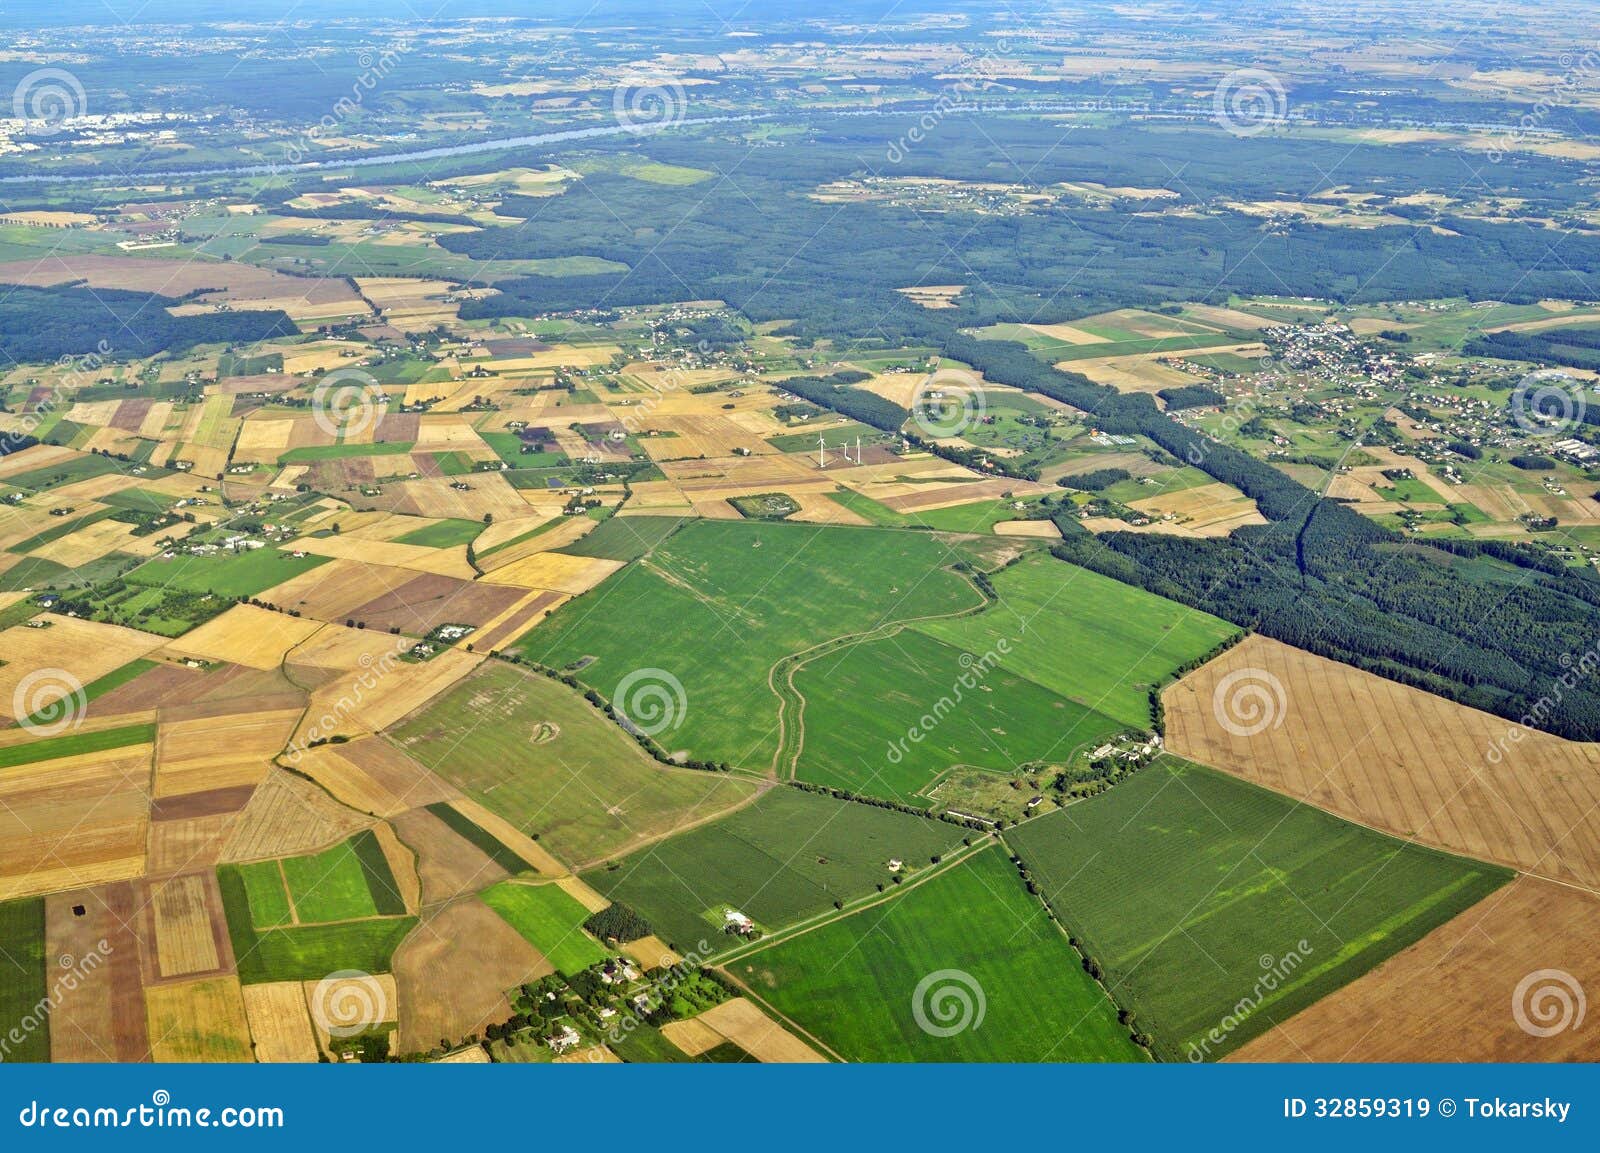 aerial view - central poland